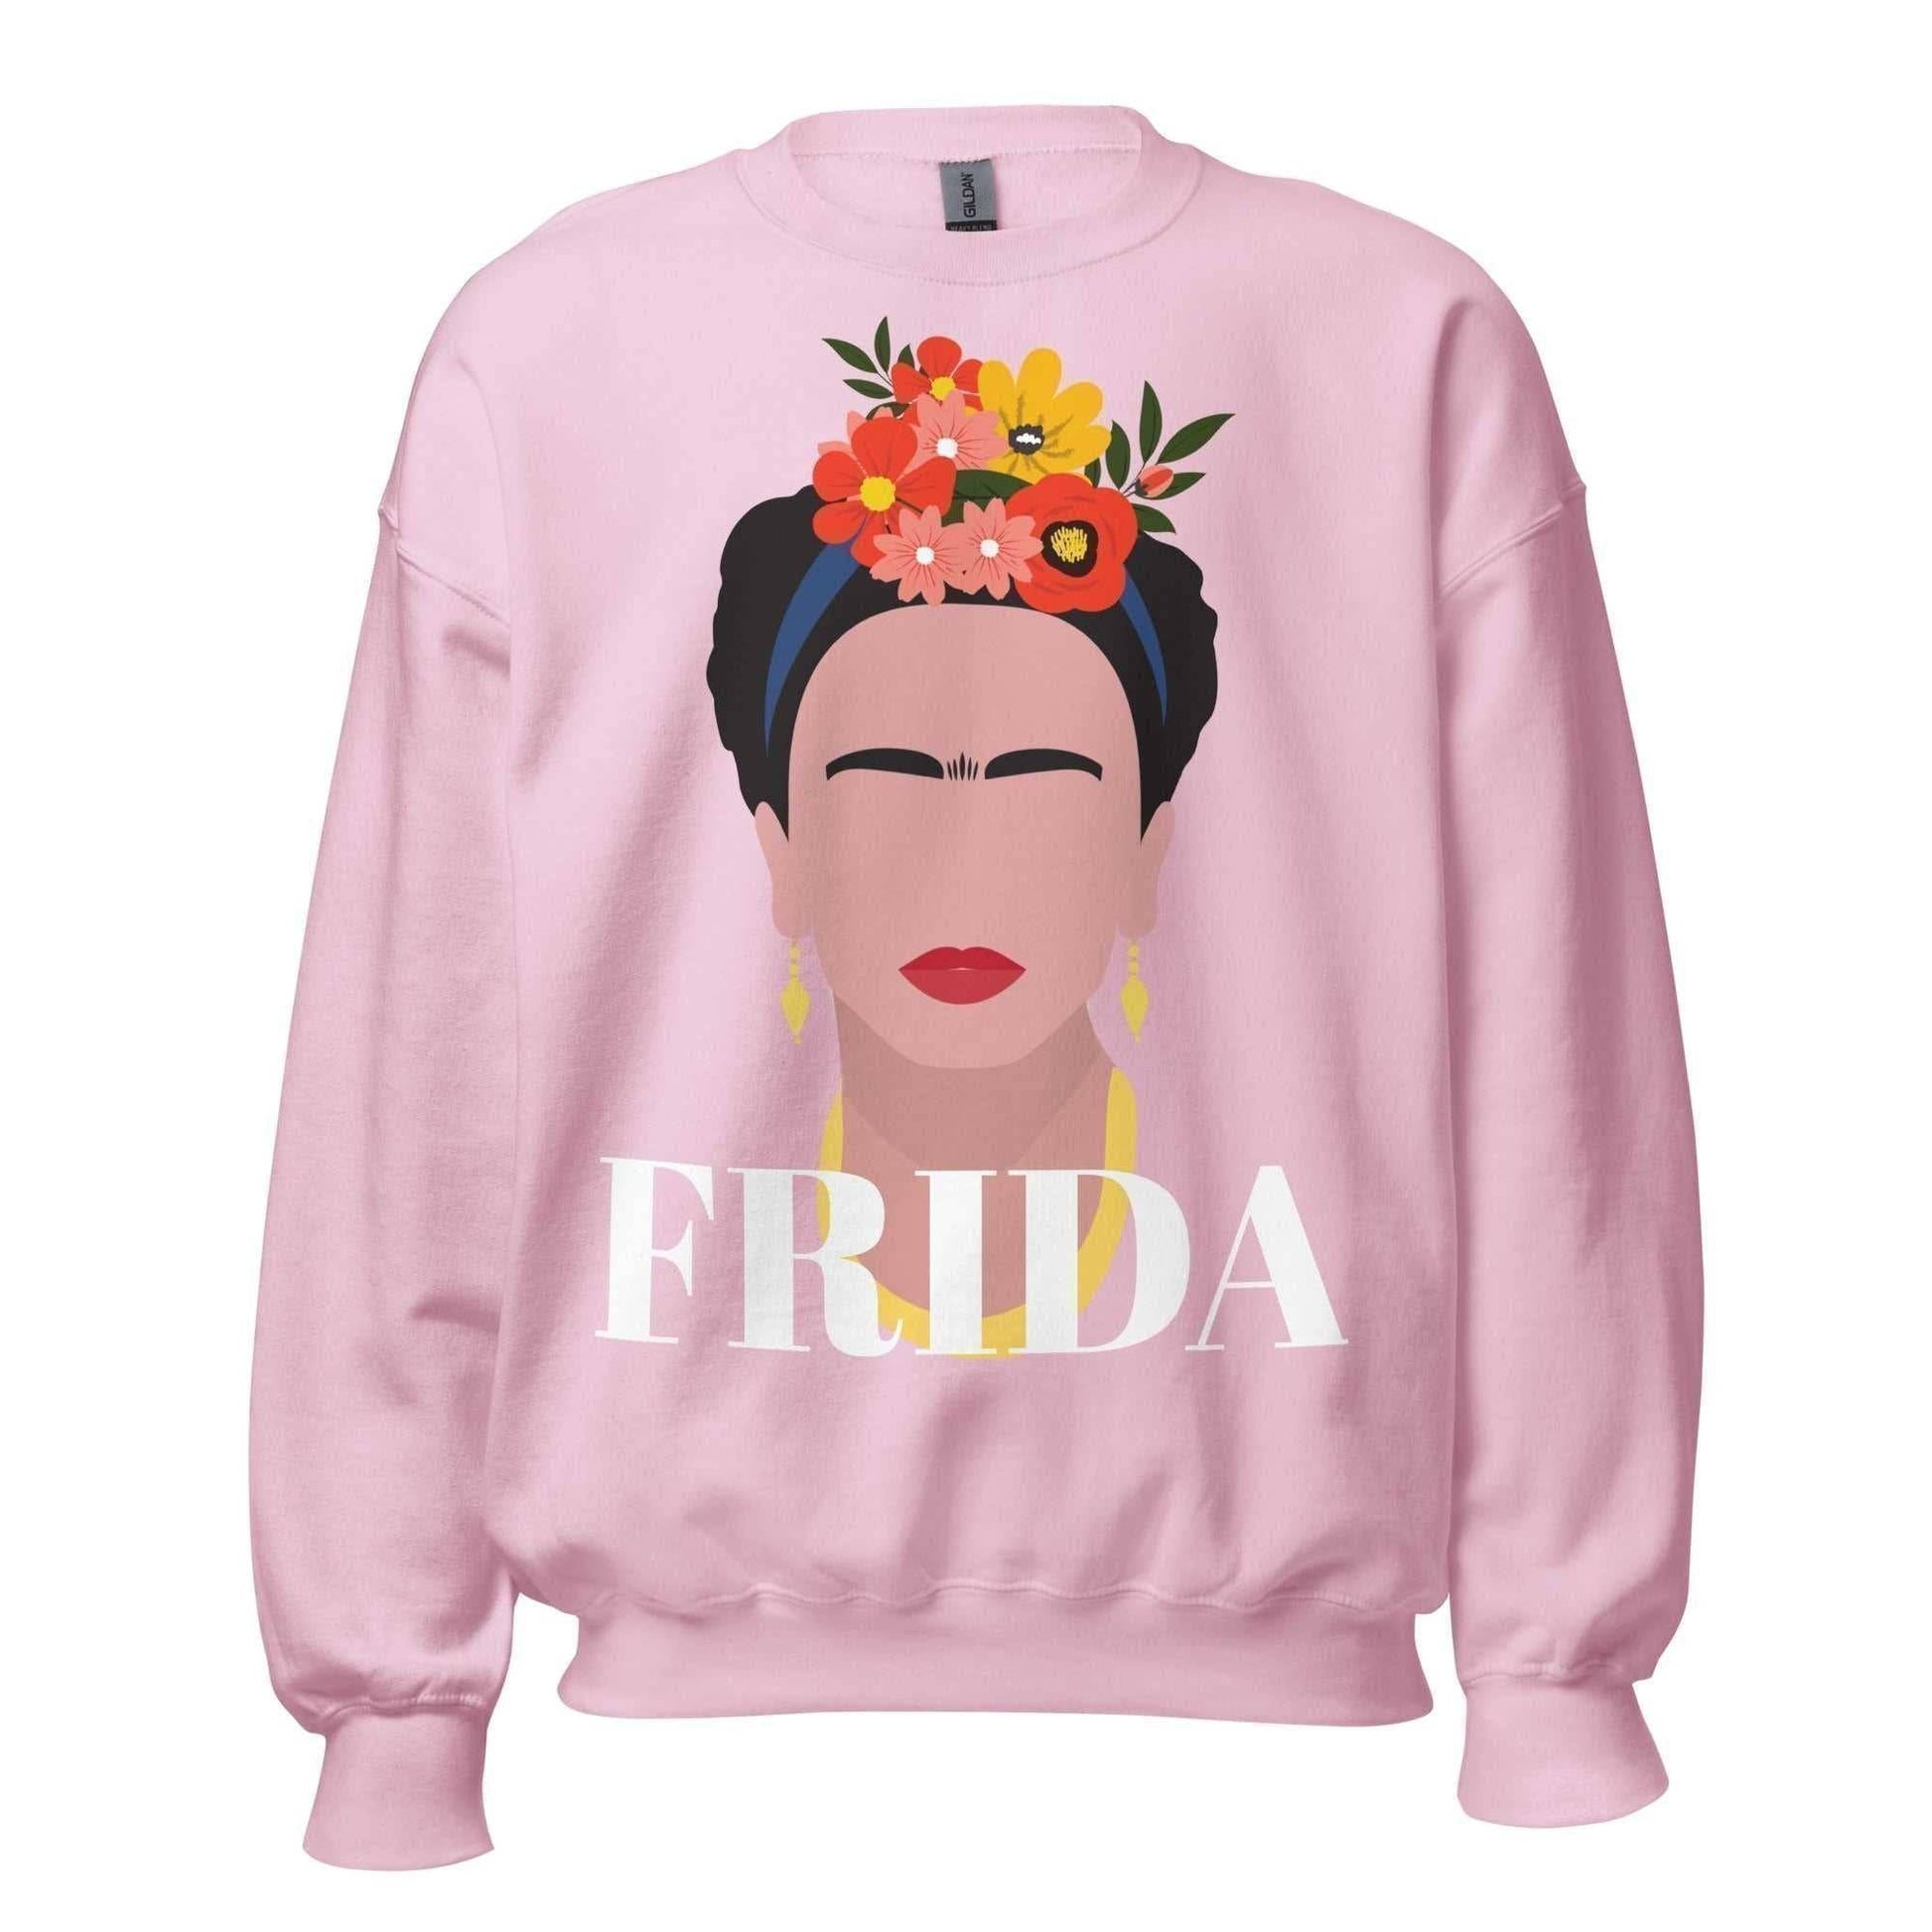 Frida Kahlo Sweatshirt Light Pink